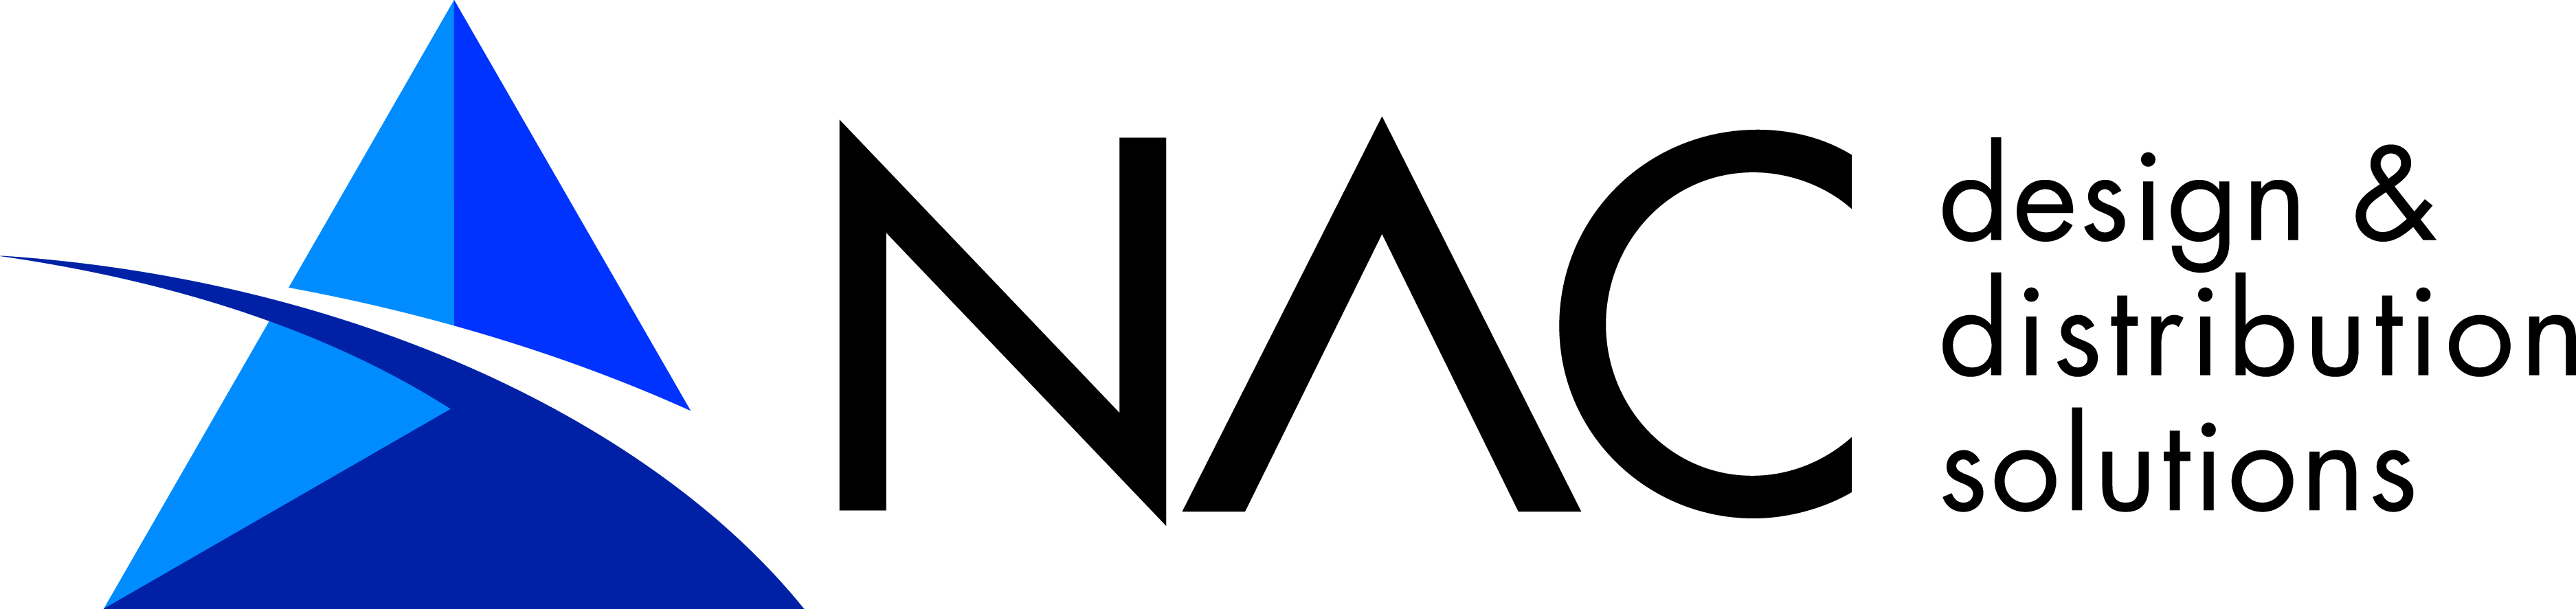 NAC_logo_Horz(1).jpg